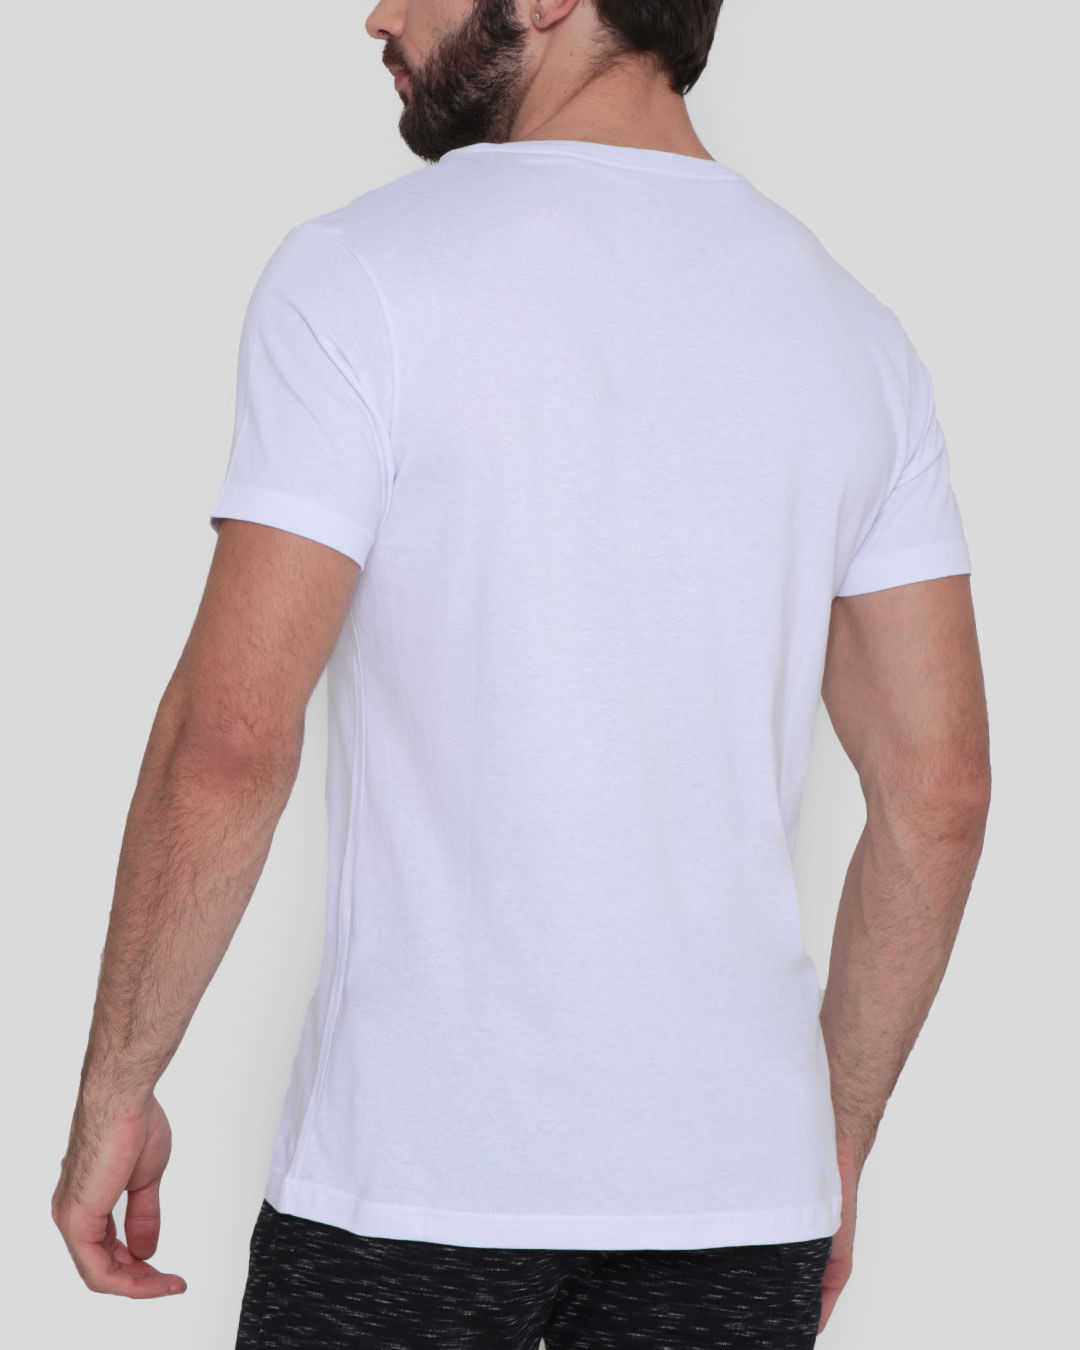 Bioworld Camiseta masculina Tekken Character Group branca para jogos e  vestuário Tekken, Branco, S